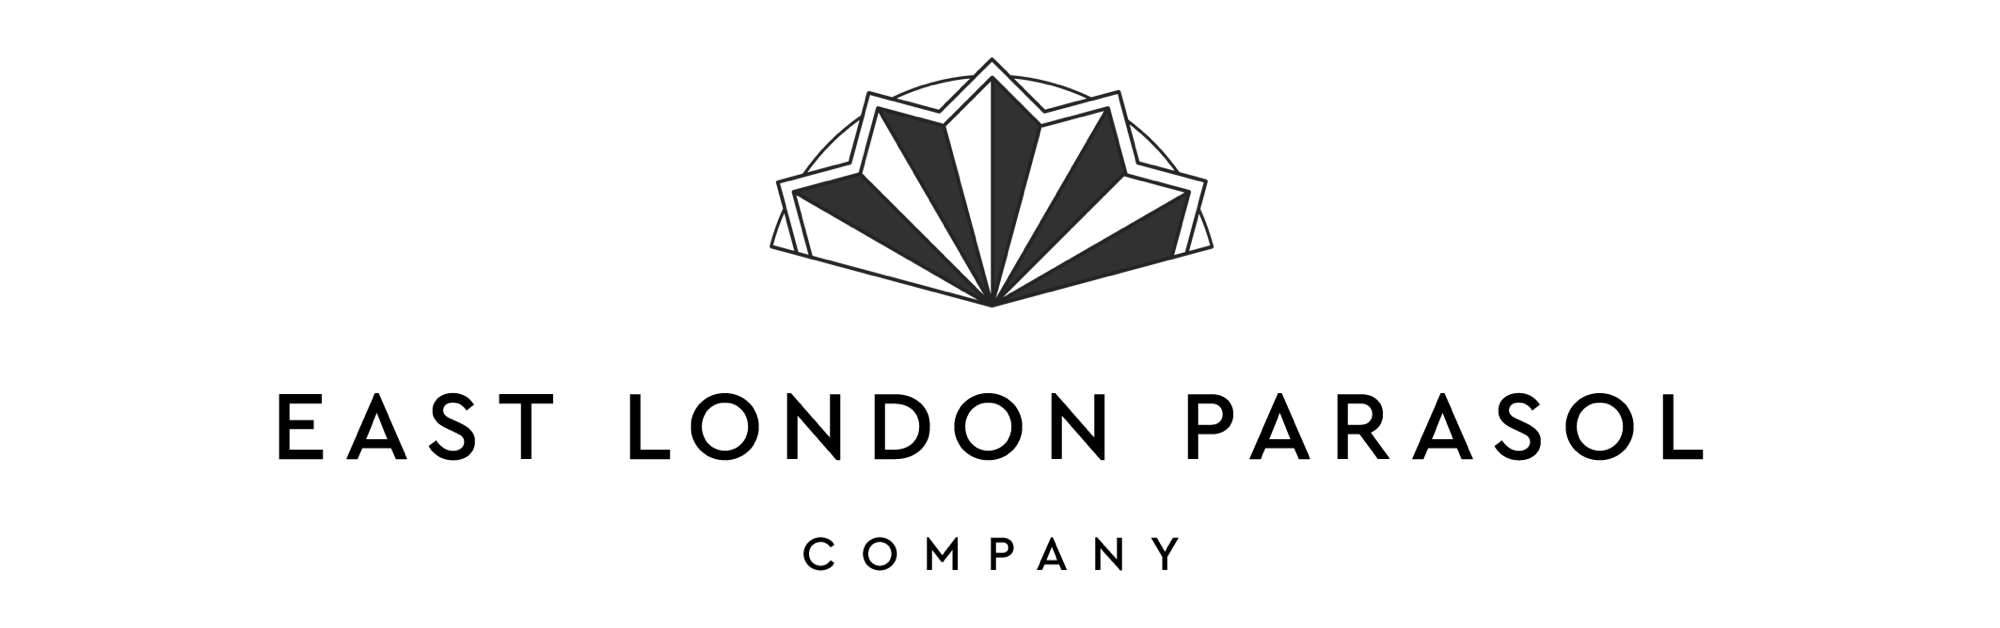 Parasol Logo - East London Parasol Company